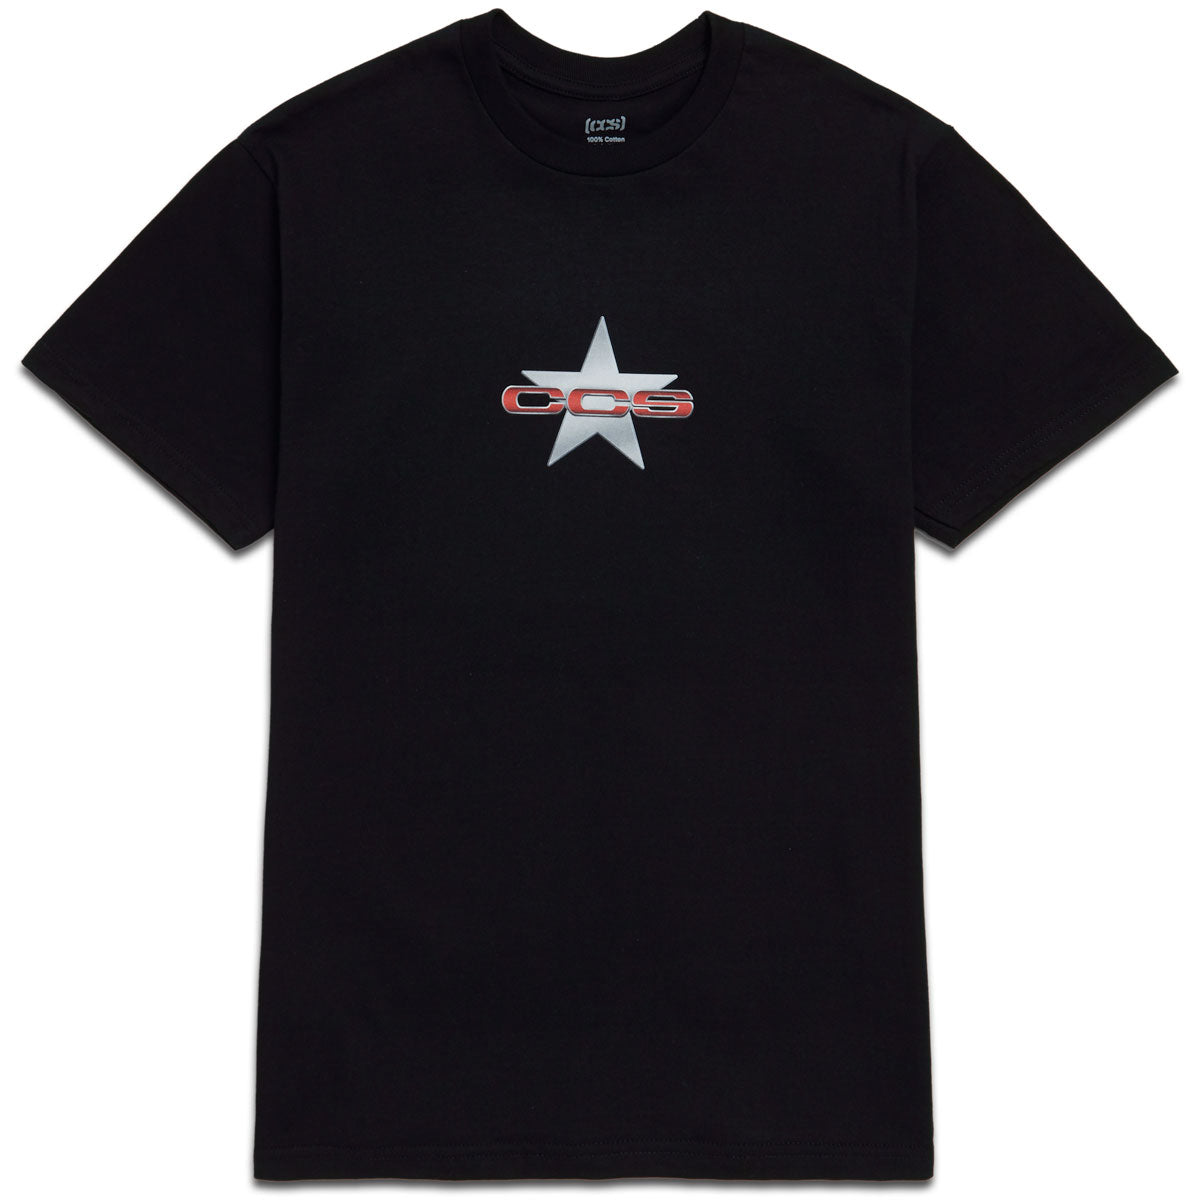 CCS 97 Star T-Shirt image 3